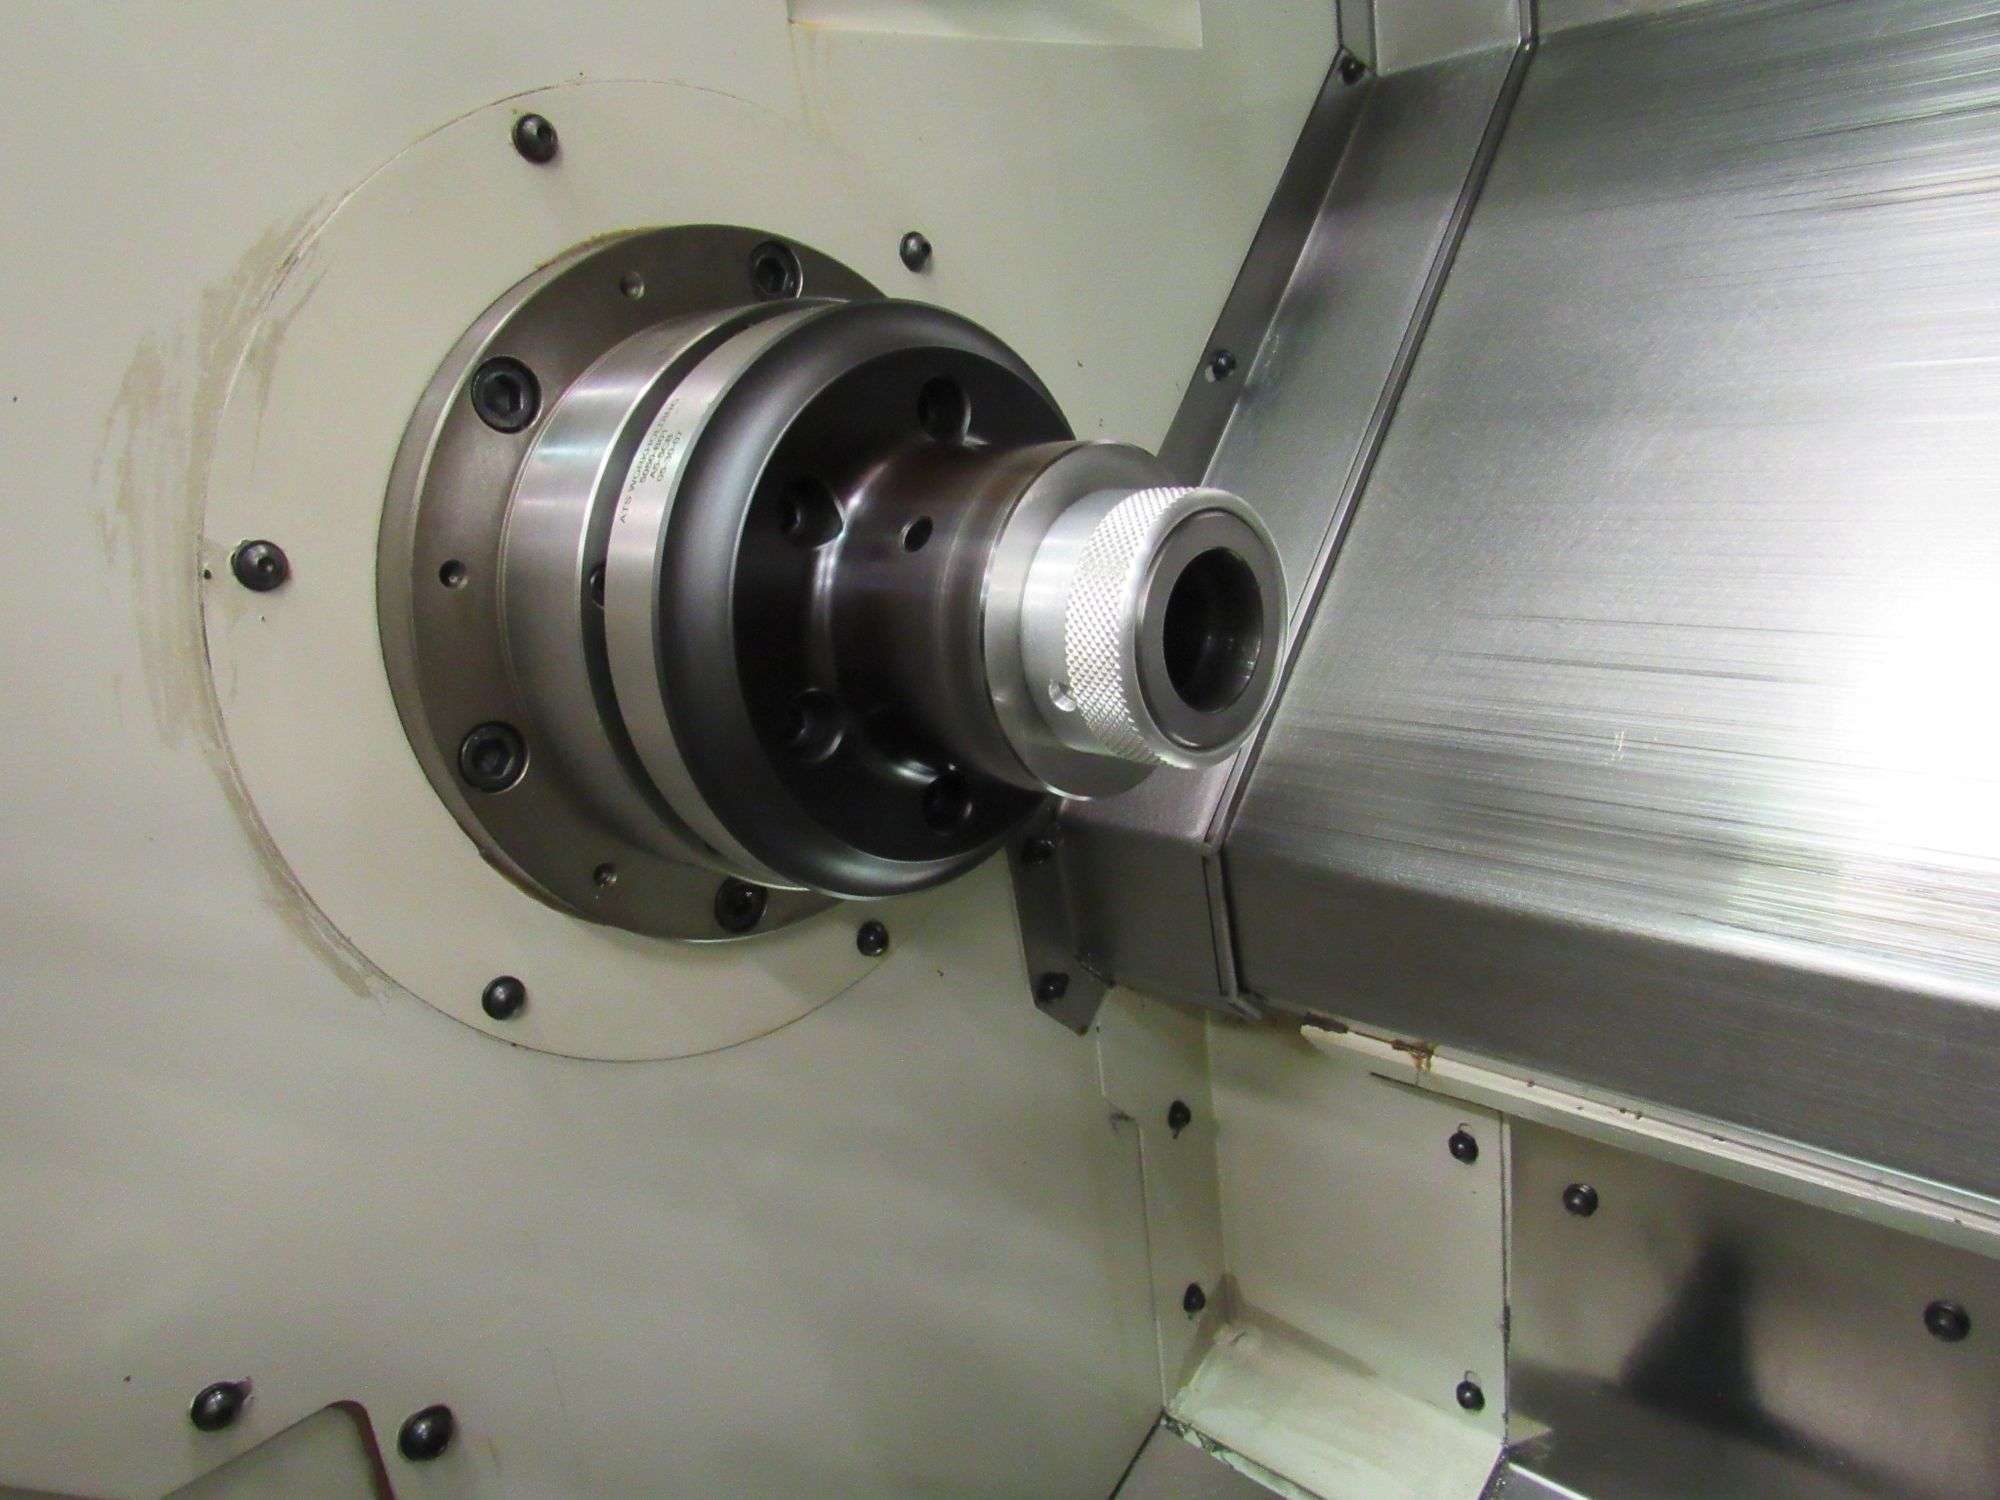 HURCO TM6 CNC Lathes | Sterling Machinery Ventures